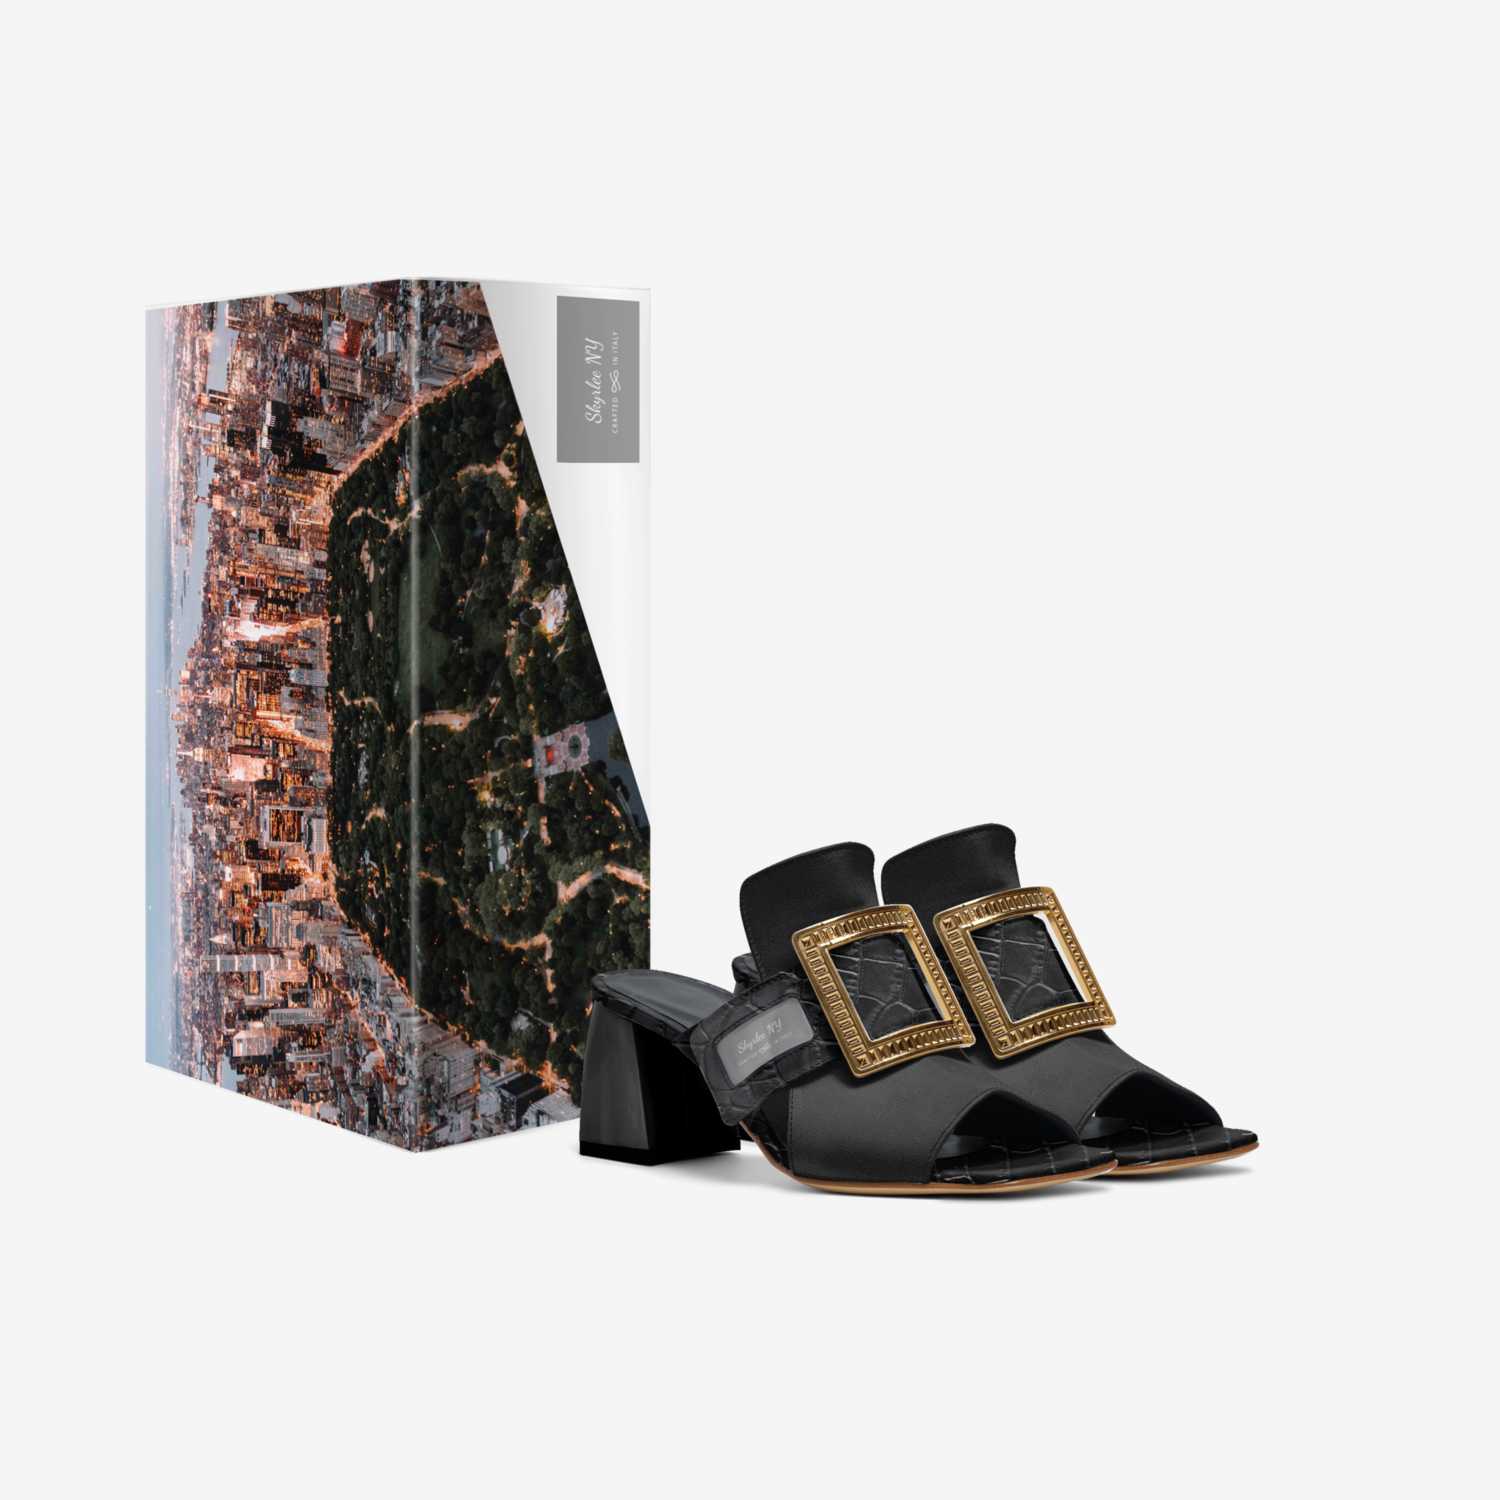 Skyrlee NY custom made in Italy shoes by Rosanny Amaro | Box view